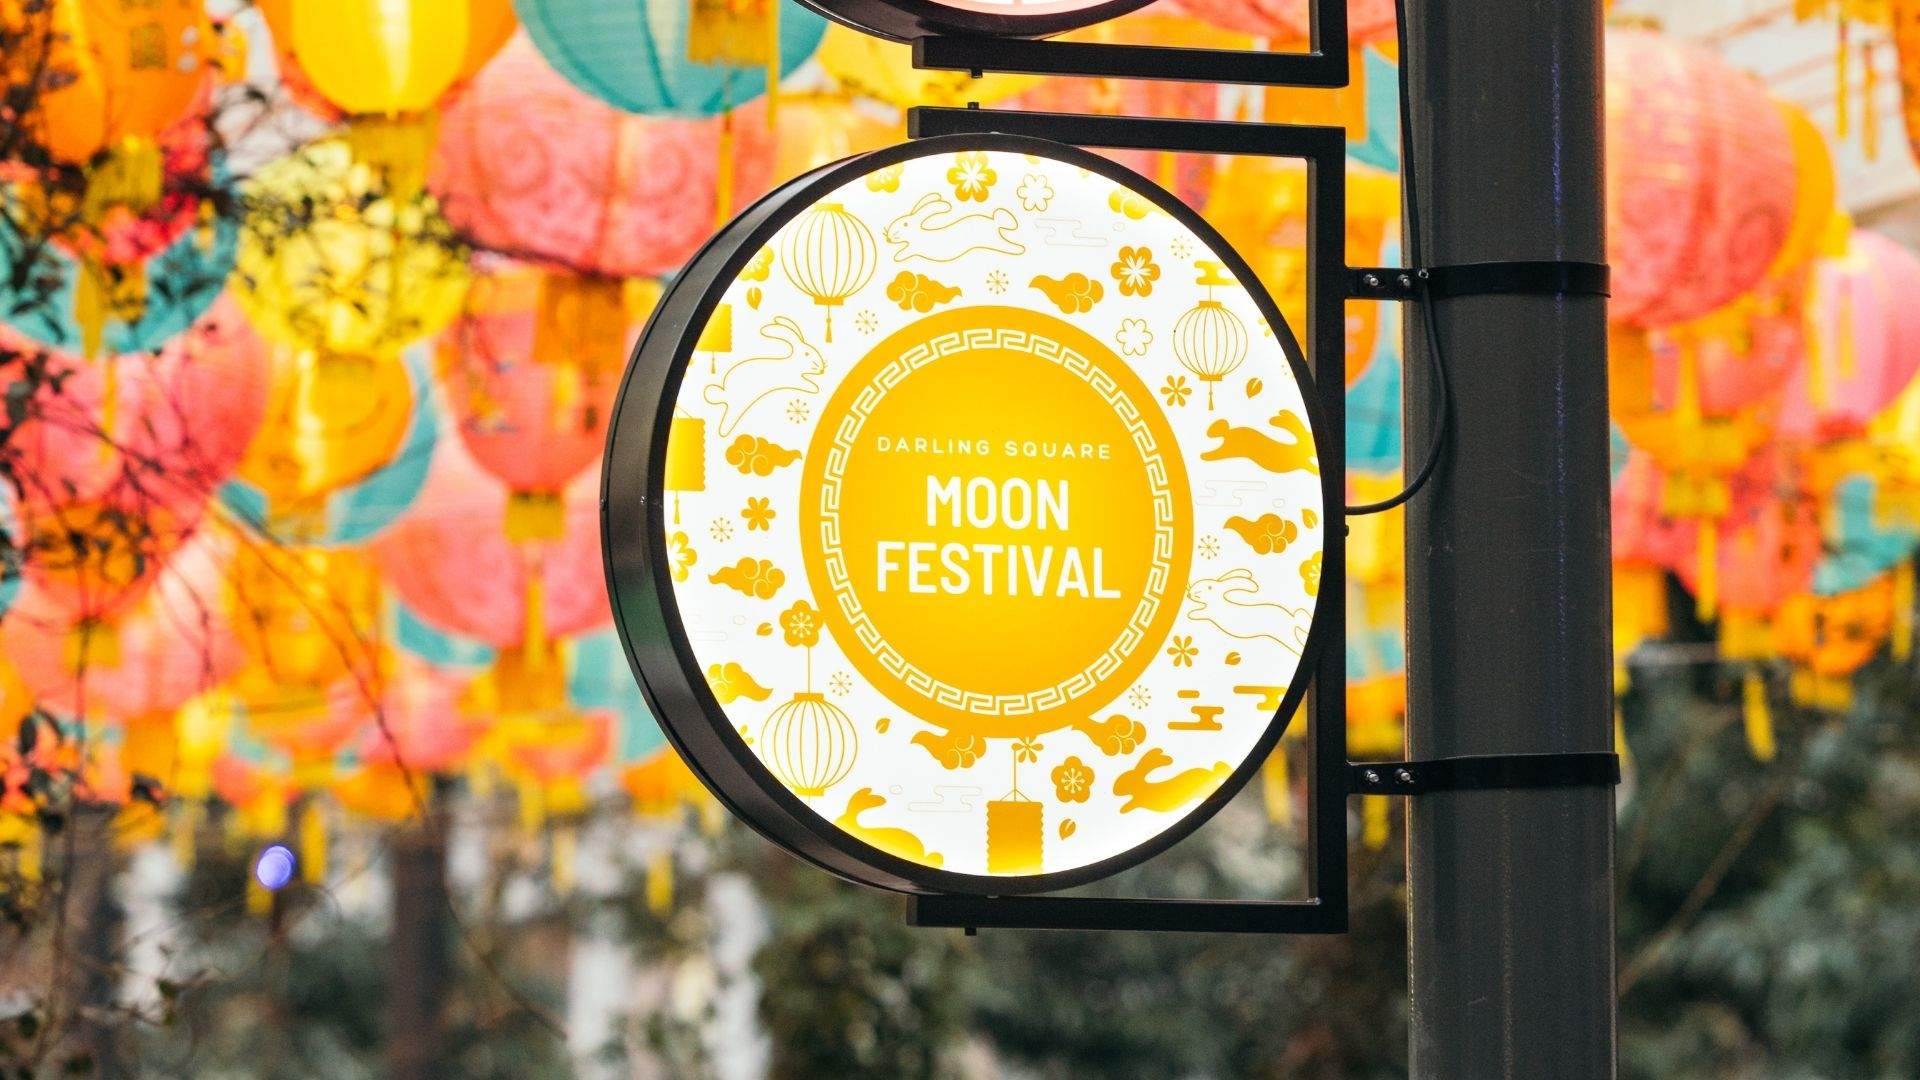 Darling Square Moon Festival 2023